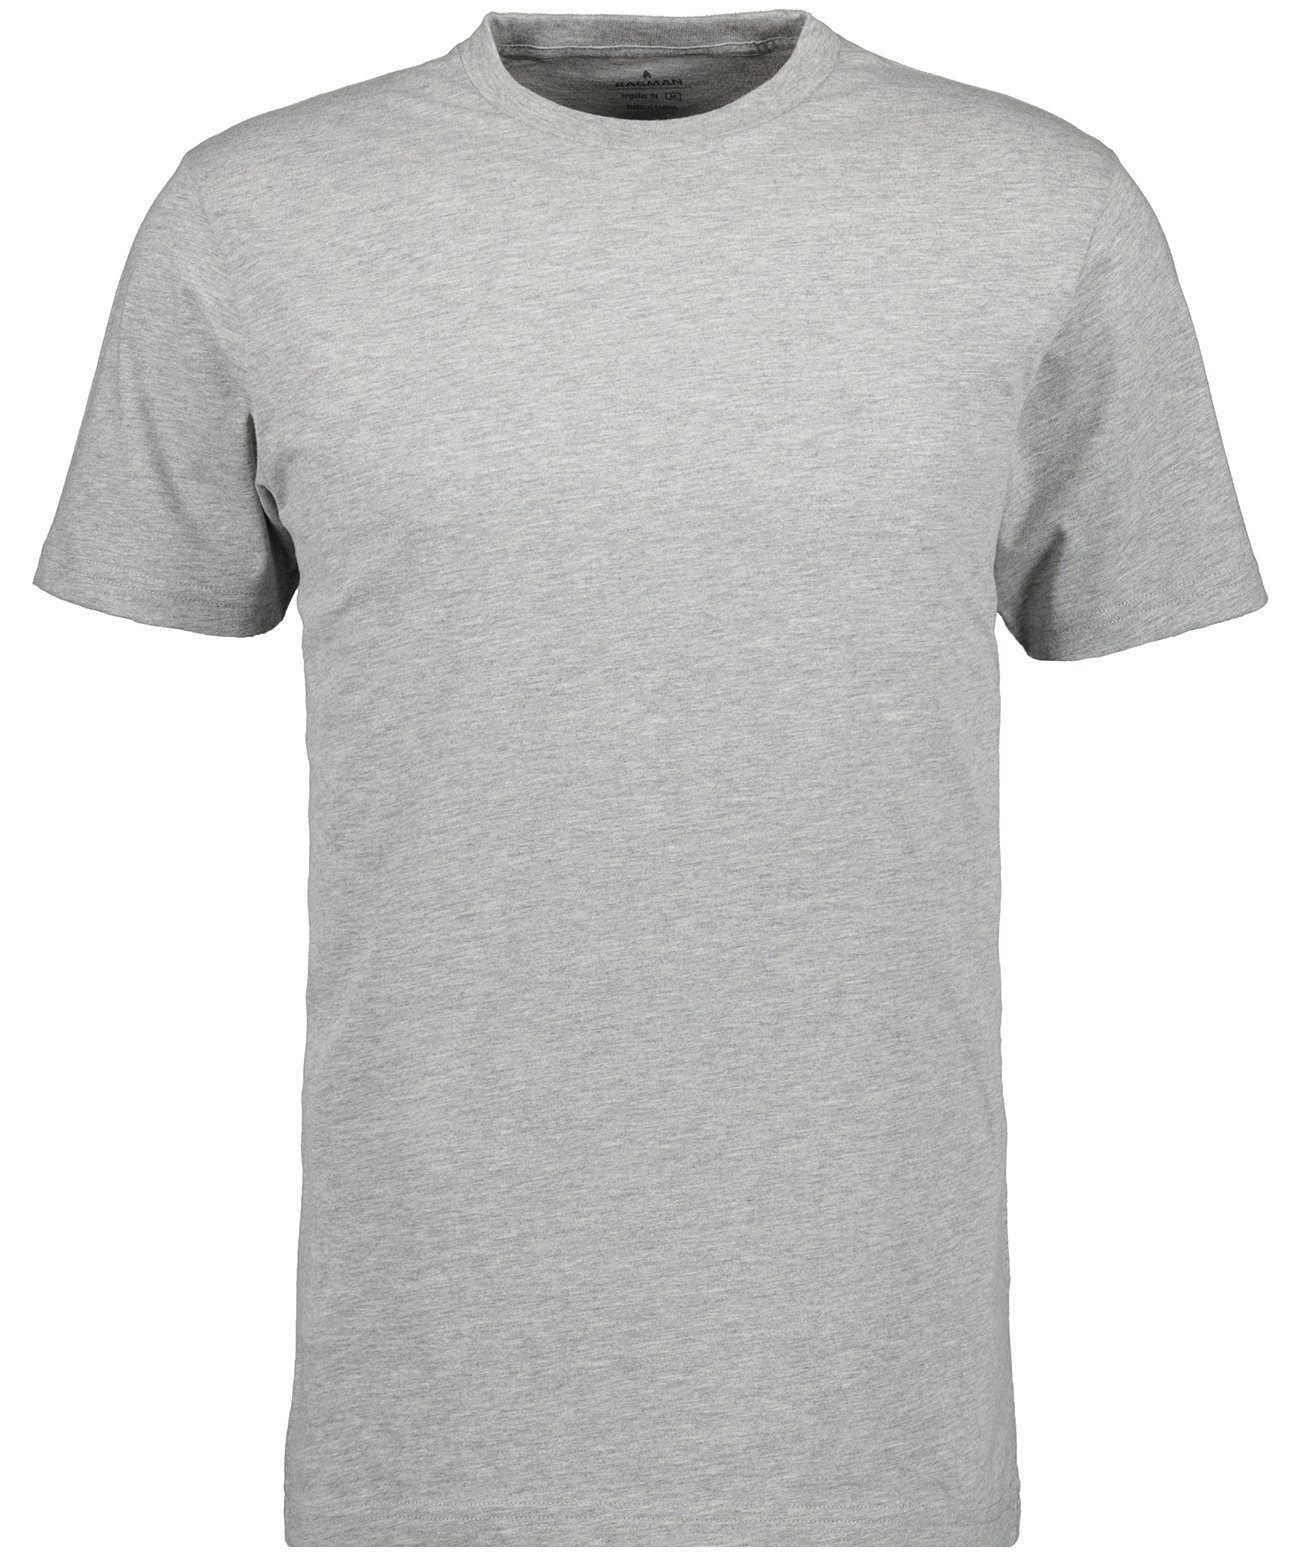 RAGMAN T-Shirt Grau-Melange